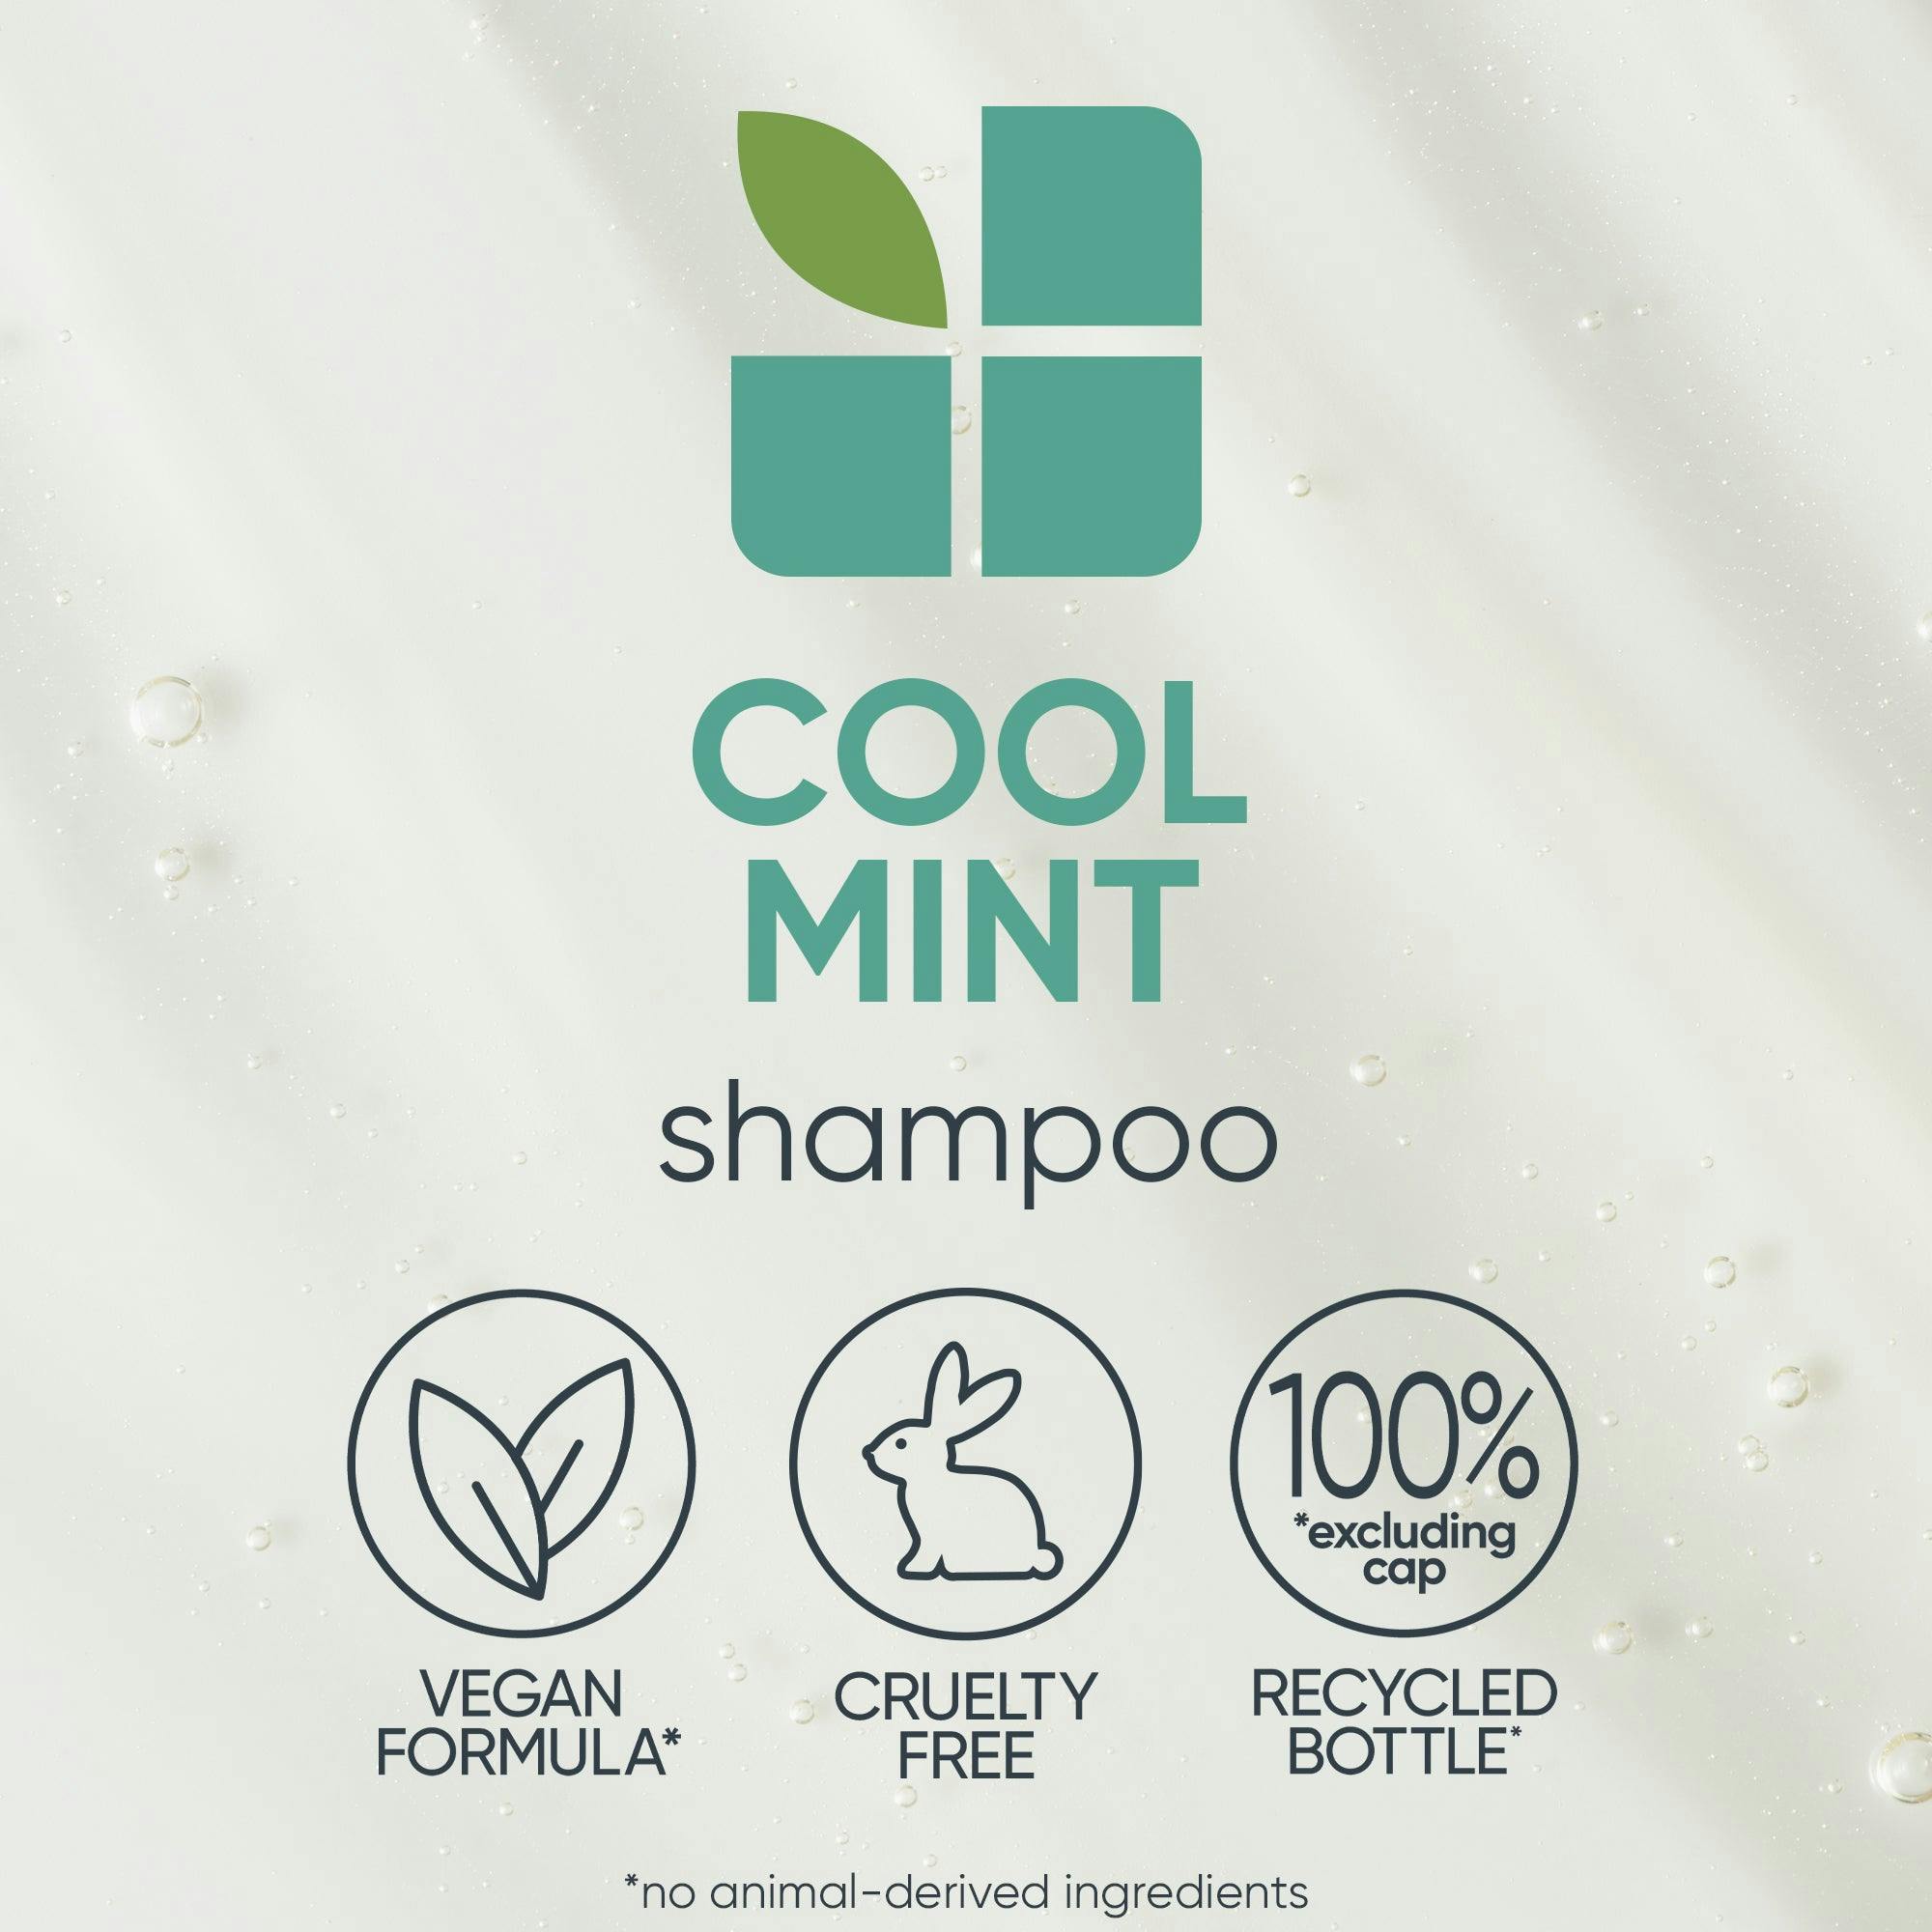 Biolage Scalpsync Cooling Mint Shampoo 400ml